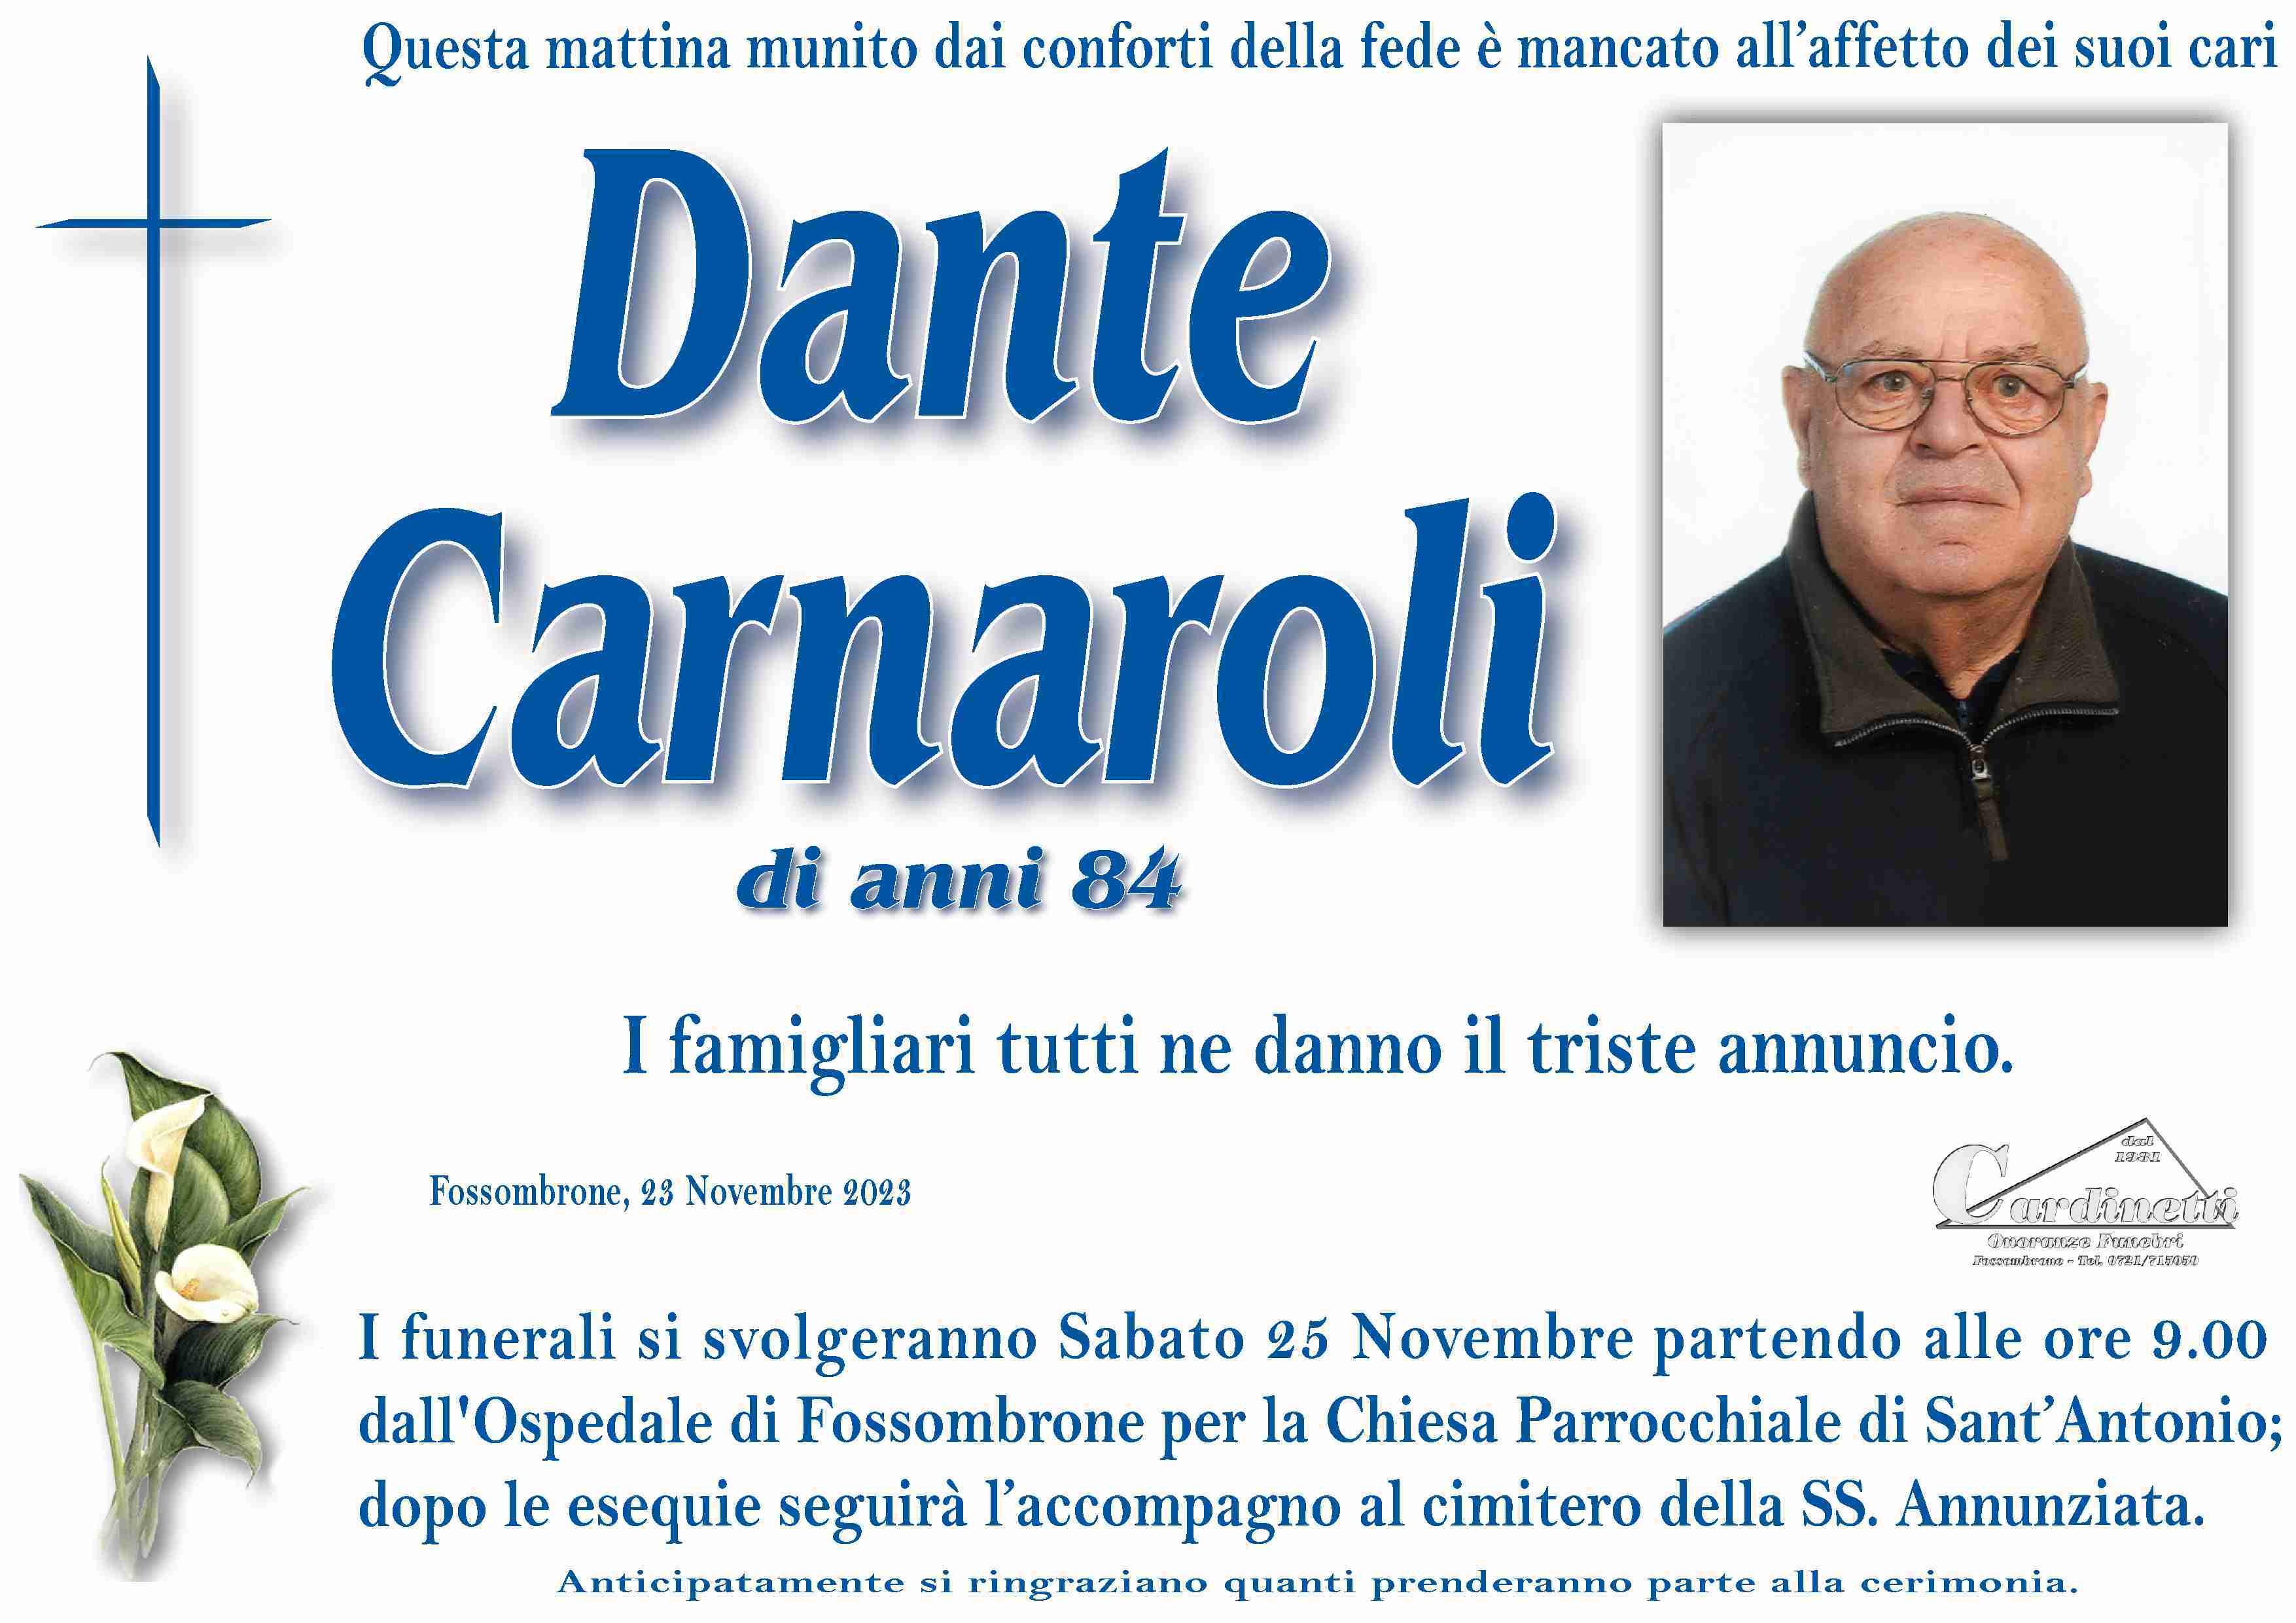 Dante Carnaroli